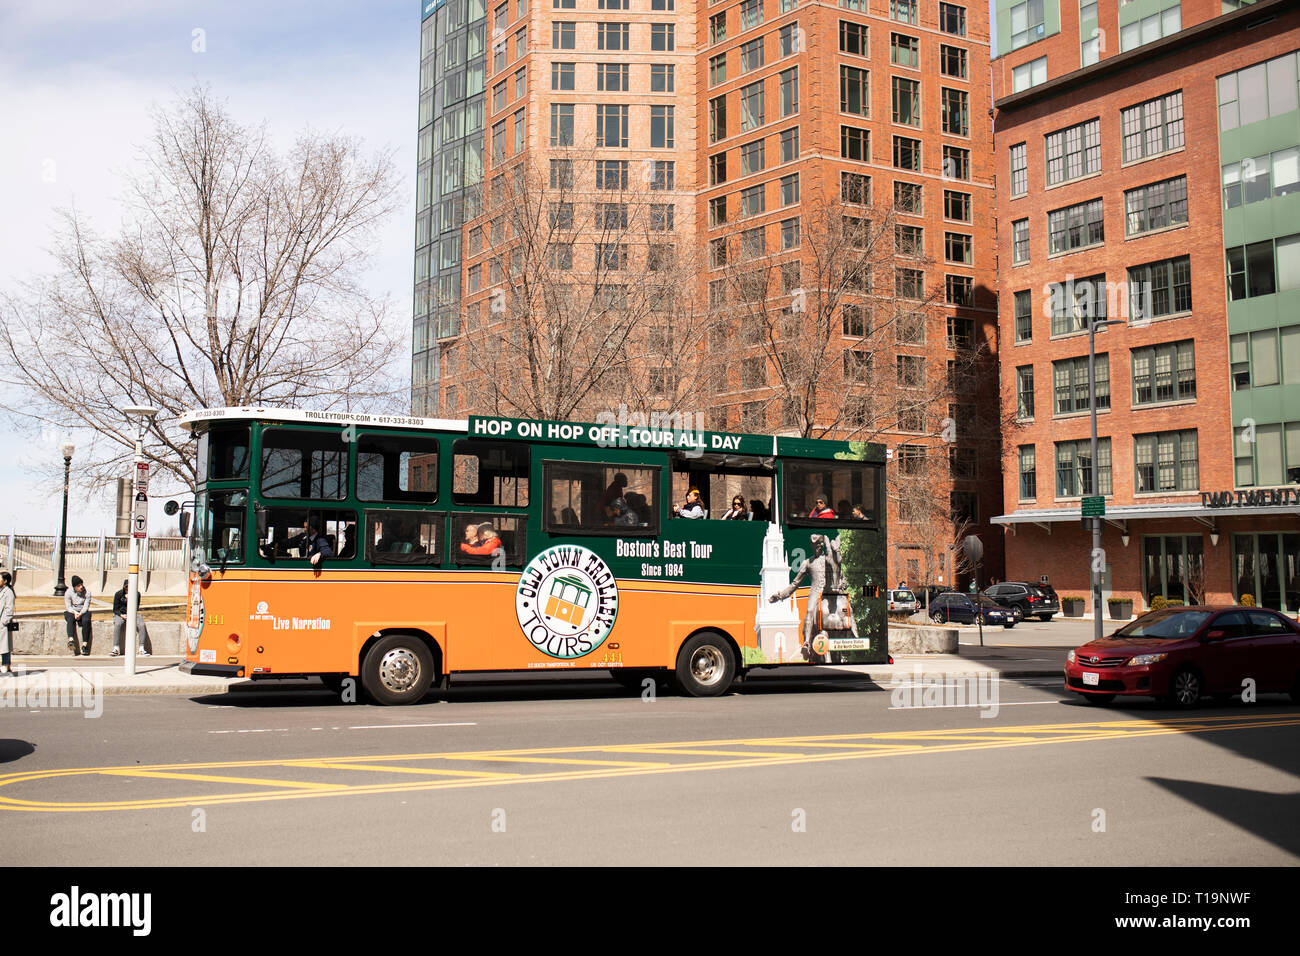 A trolley sightseeing tour bus in Boston, Massachusetts, USA. Stock Photo